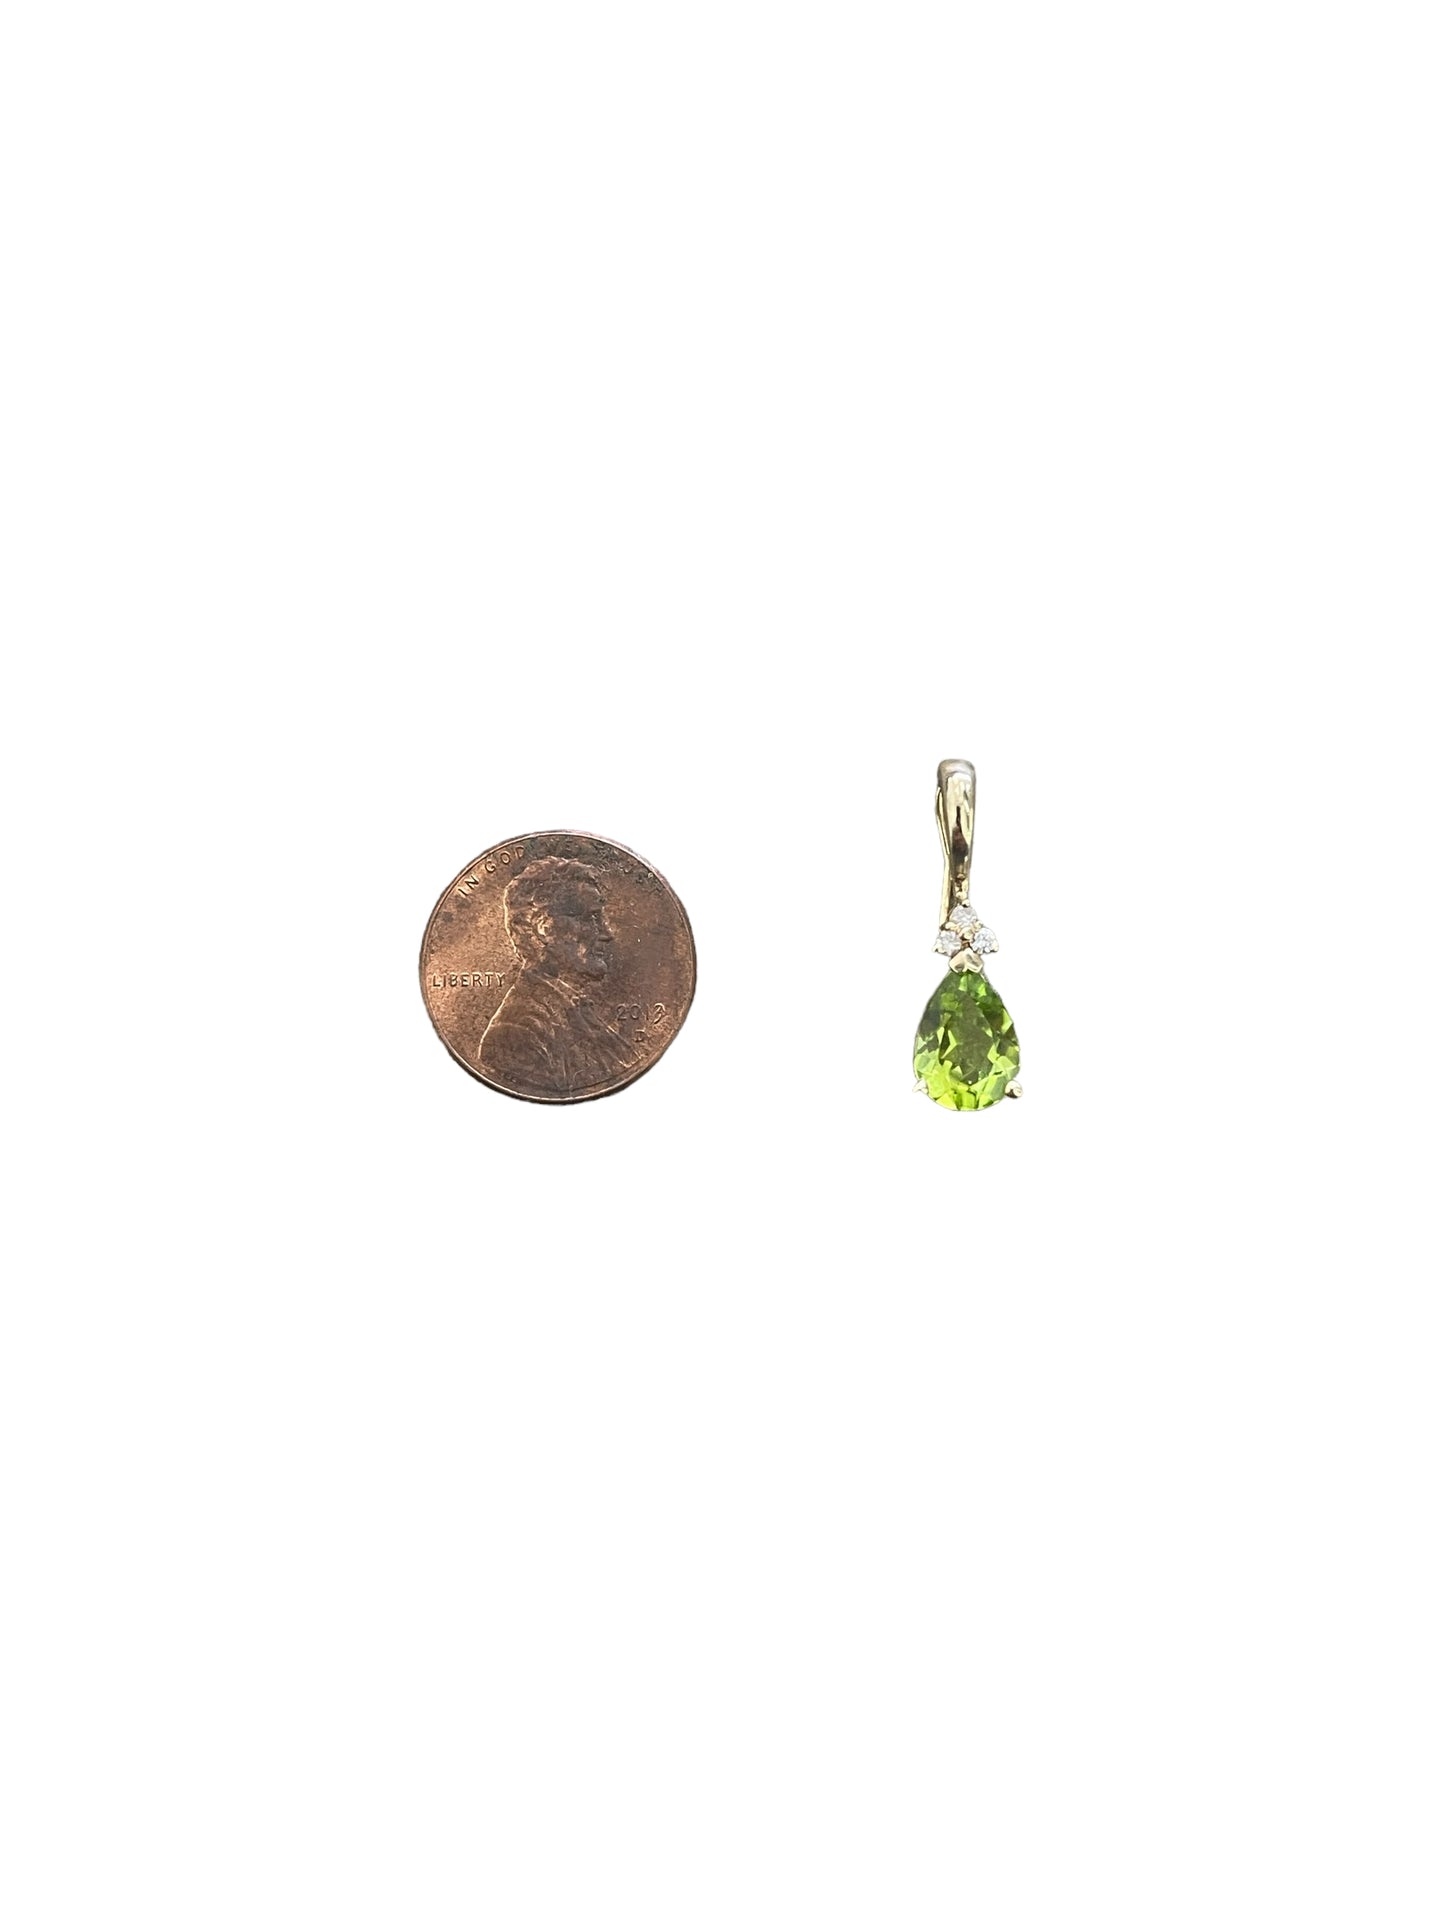 14K Yellow Gold Pear Shaped Green Stone W/ 3 Diamonds Charm (1.8 Grams)